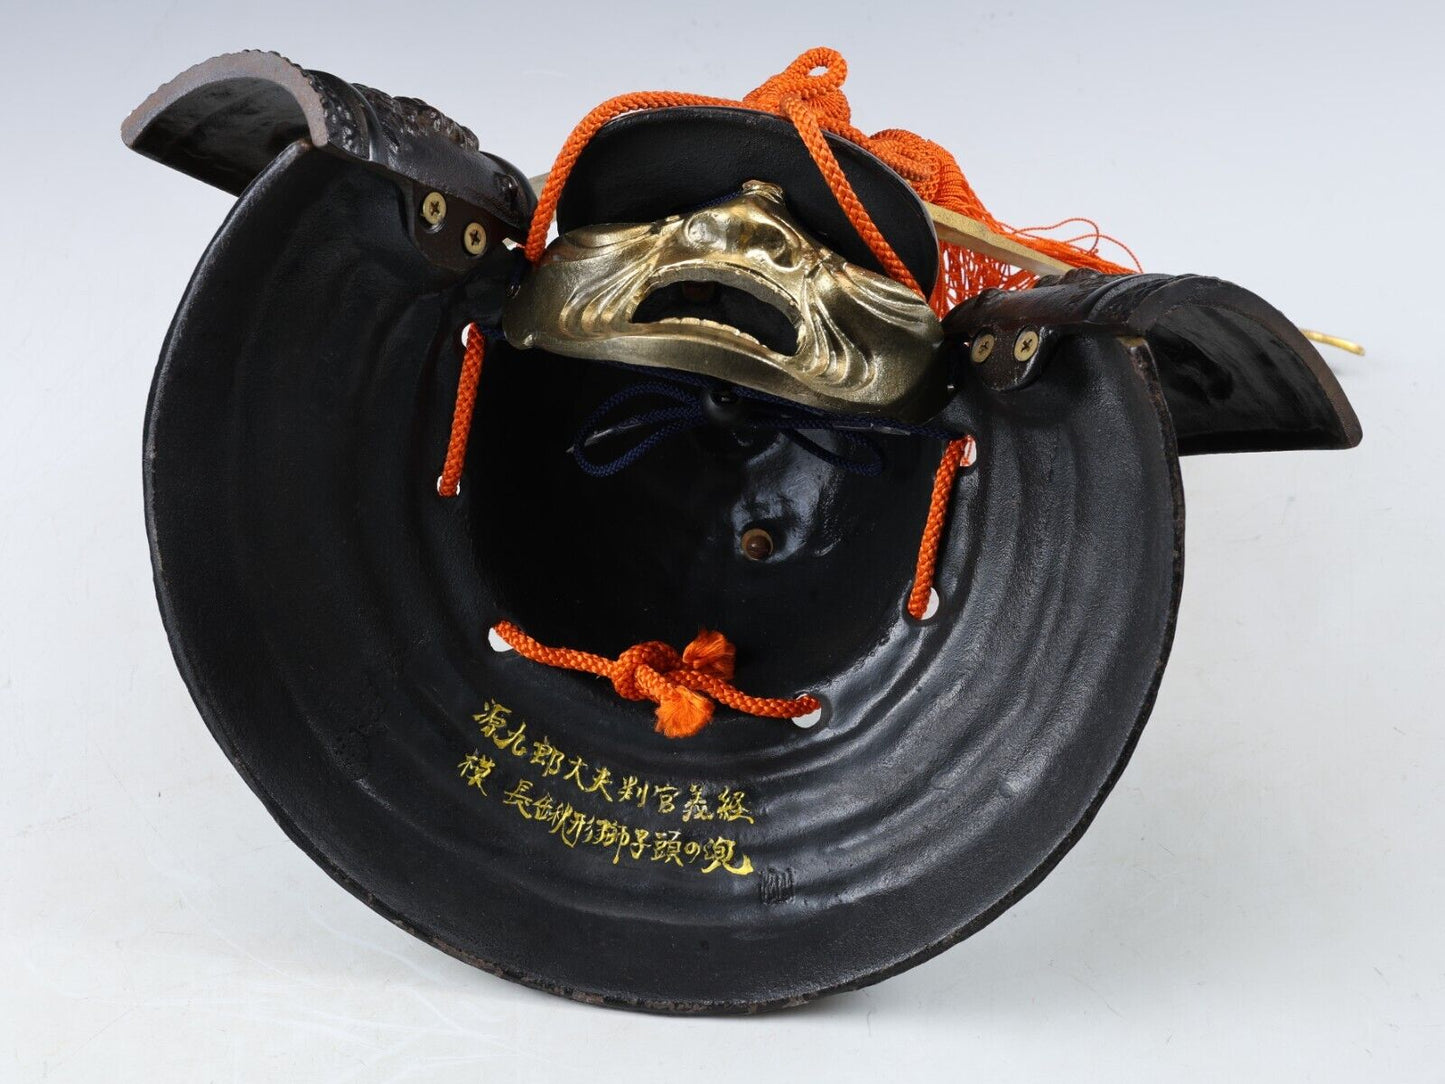 Authentic Japanese Kabuto Helmet with Tsushima Mask Antique Samurai Headgear.